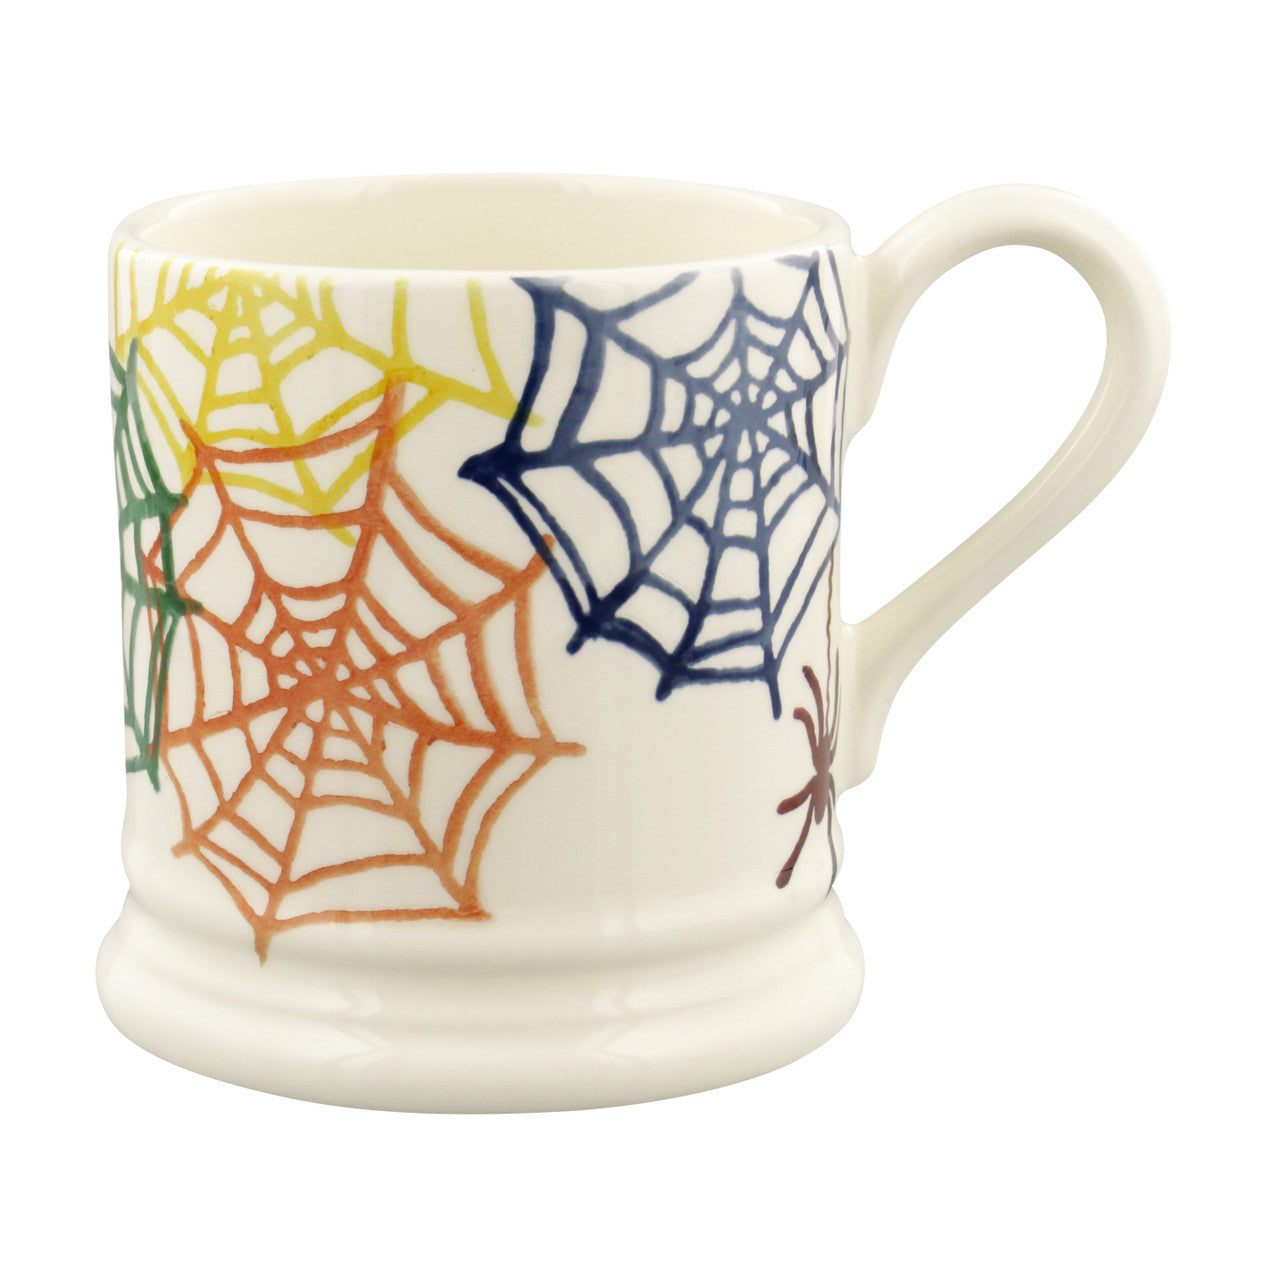 Emma Bridgewater Cobwebs 1/2 Pint Mug